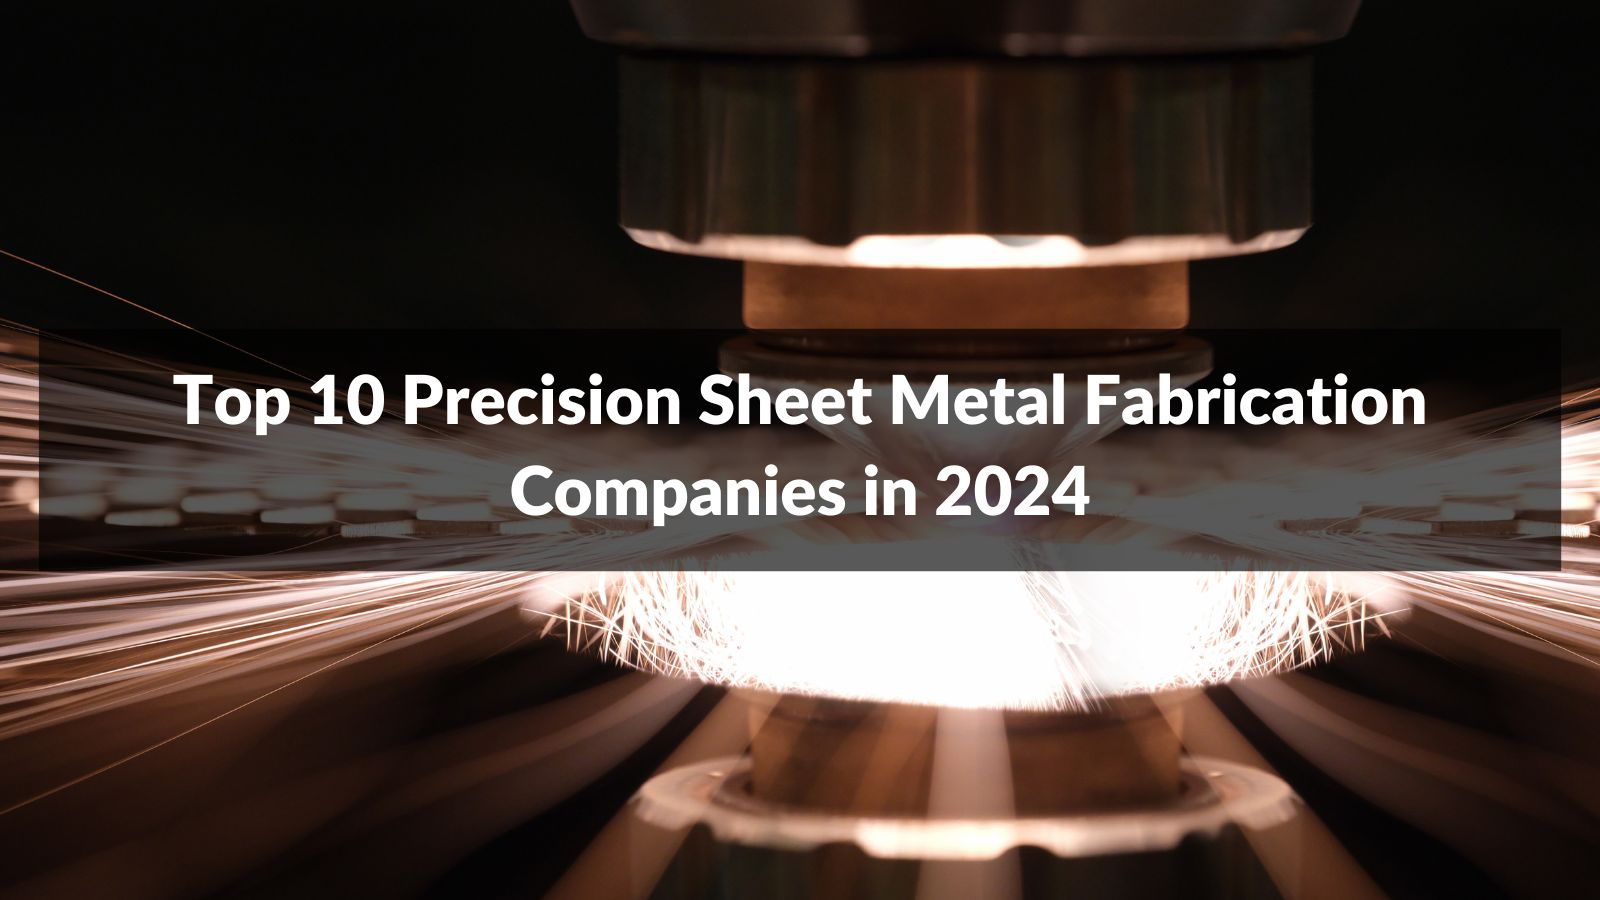 Top 10 Precision Sheet Metal Fabrication Companies in 2024